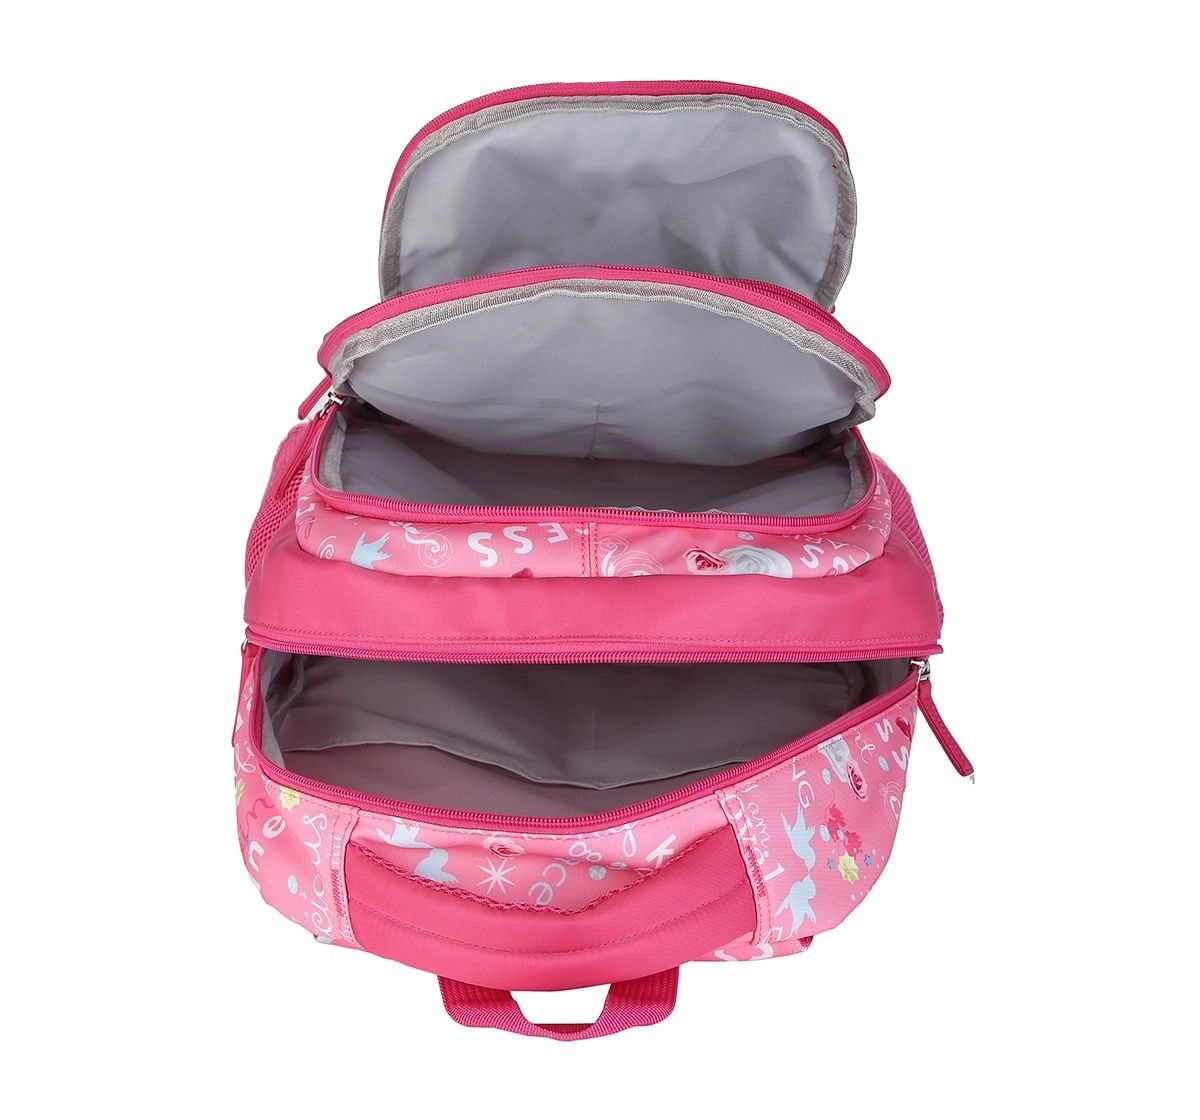 Disney Princess Believe In Friendship Pink 17" Backpack Bags for age 3Y+ 